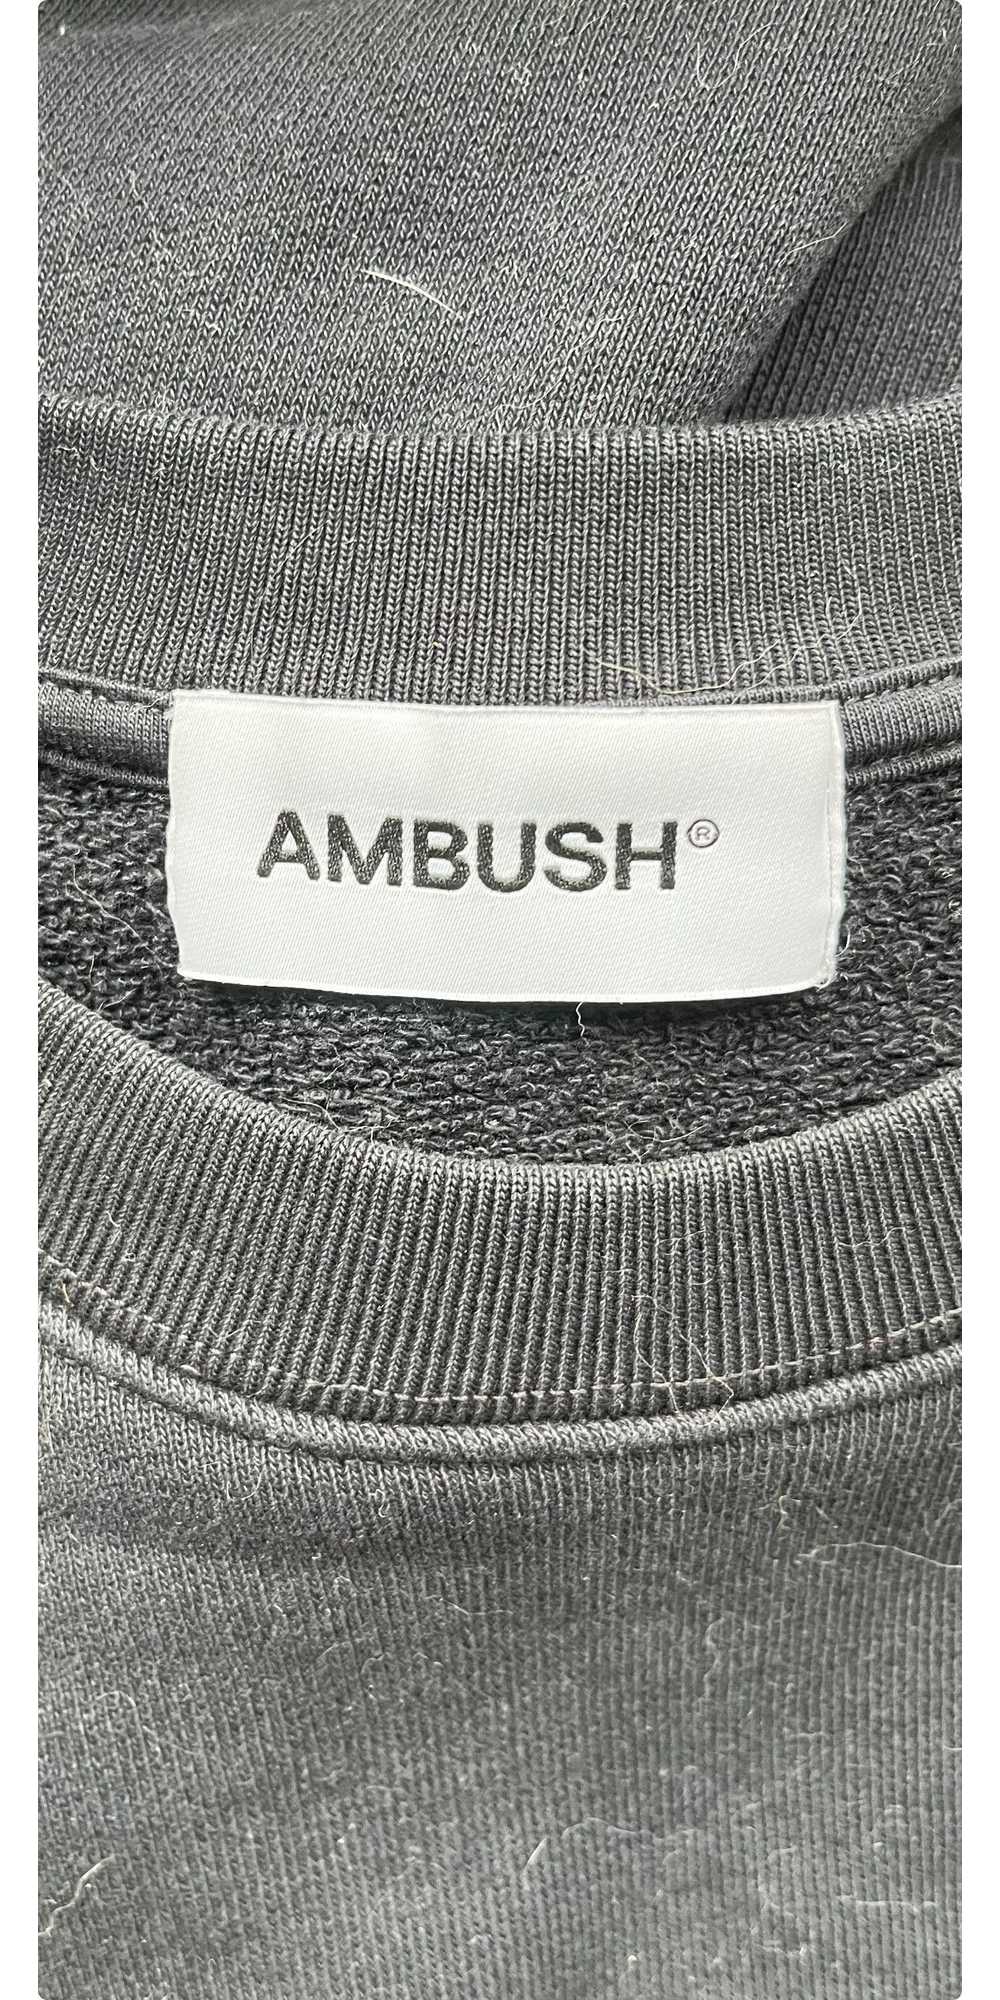 Ambush Design Ambush multicord sweatshirt - image 3